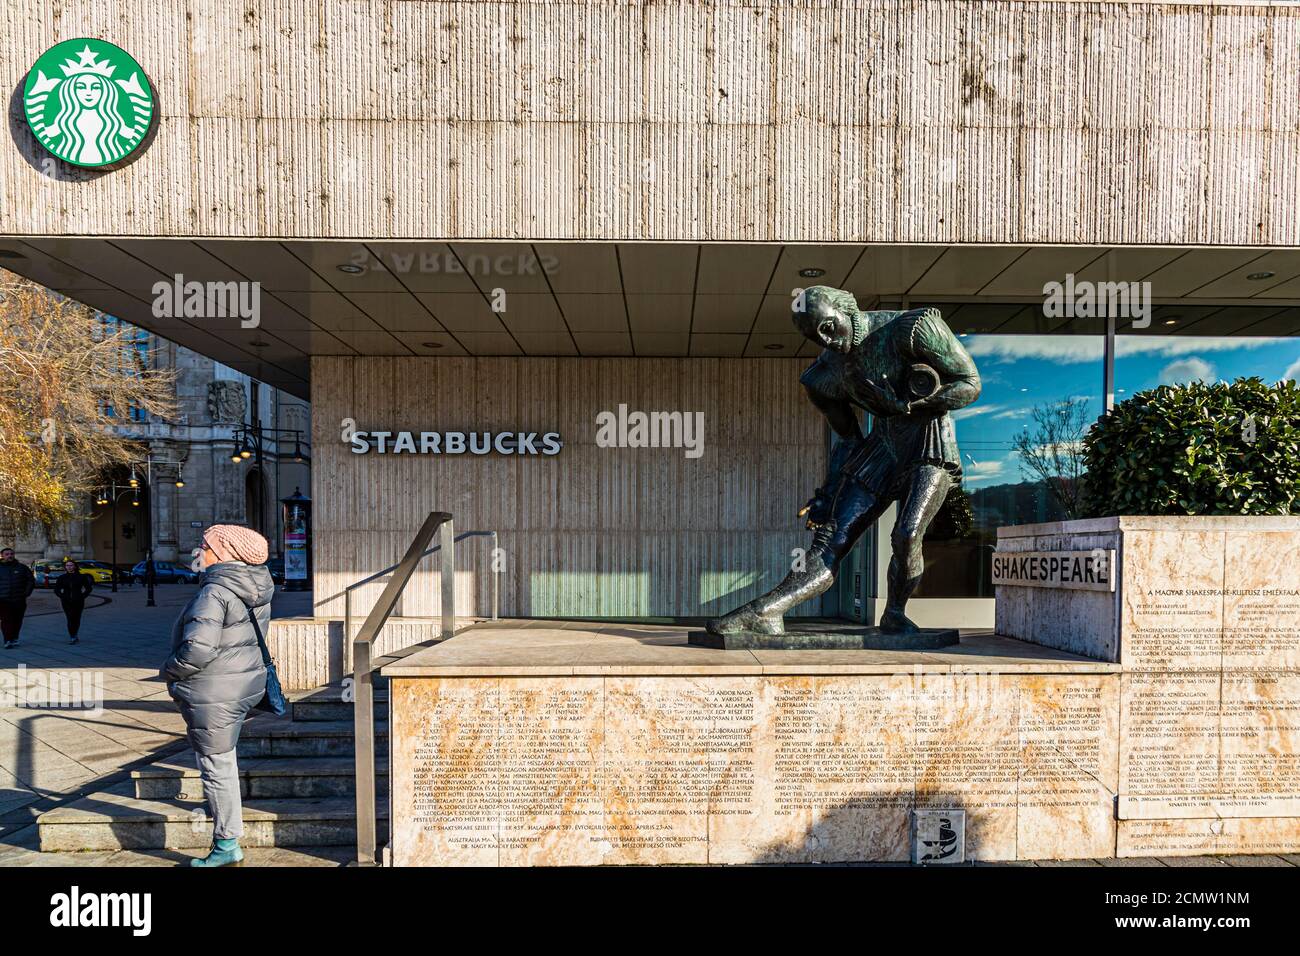 Starbucks at Shakespeare Monument in Budapest, Hungary Stock Photo